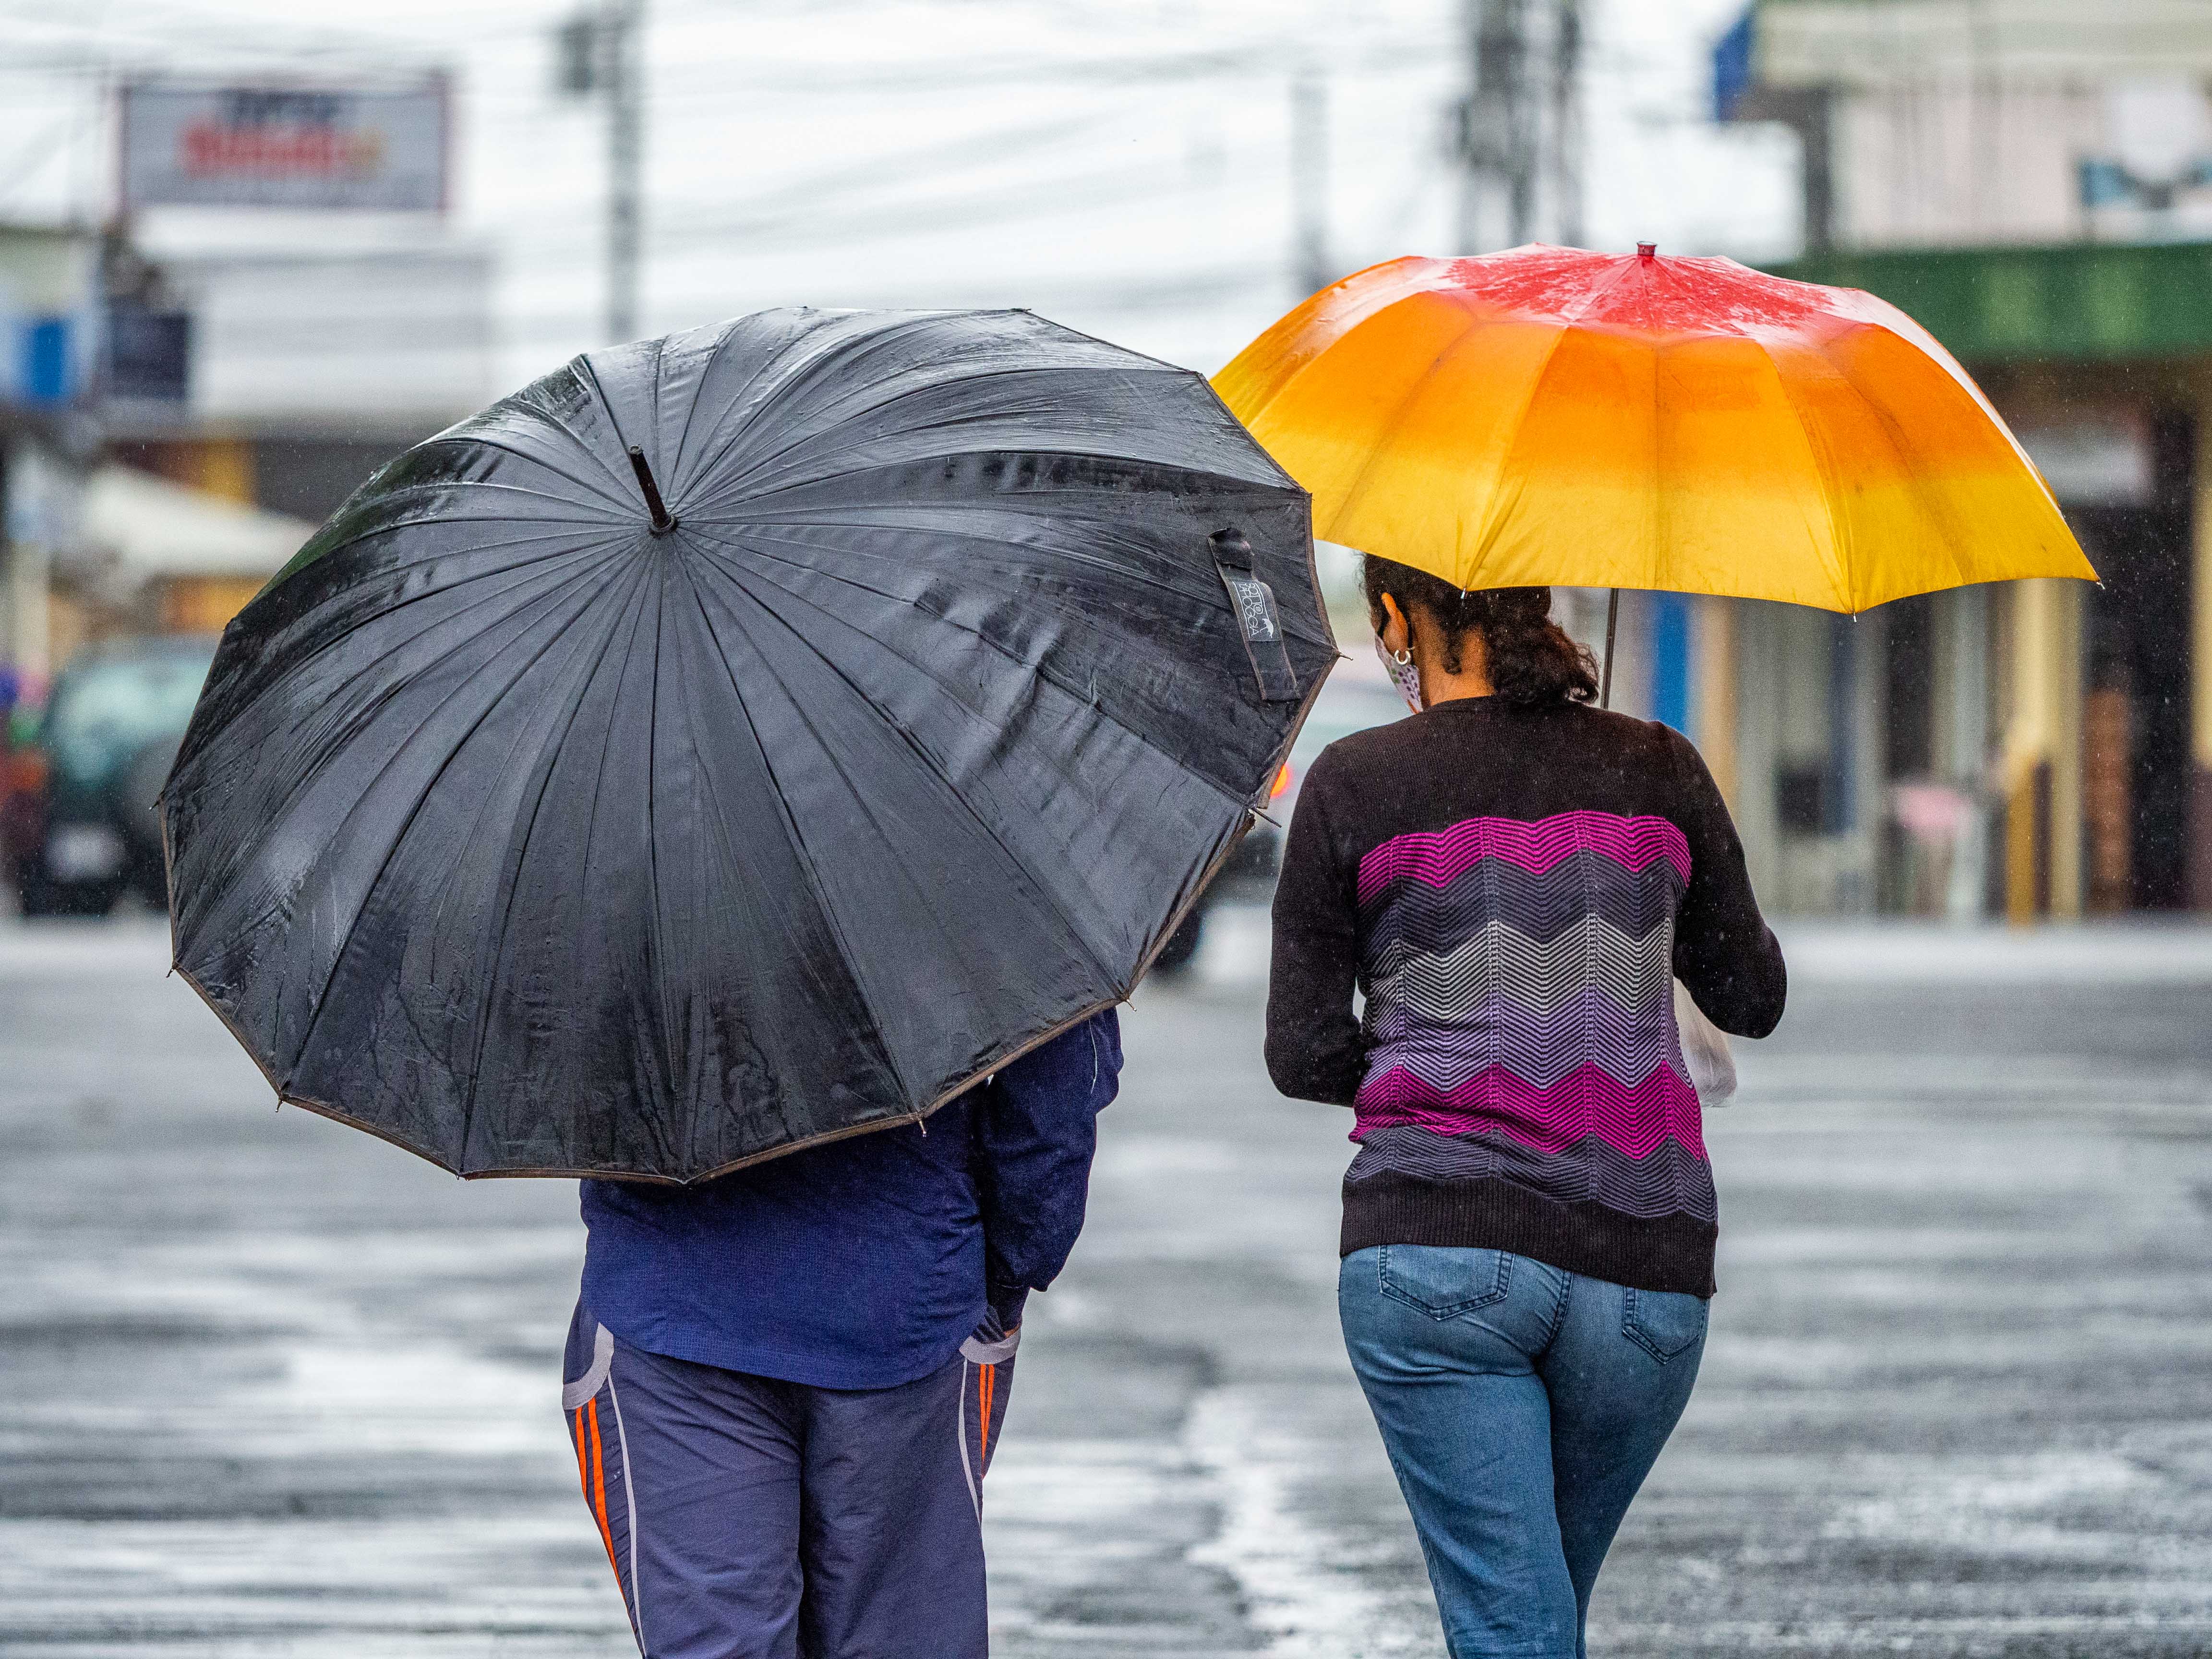 Costa Rica tendrá una semana bastante lluviosa, pronostica el IMN